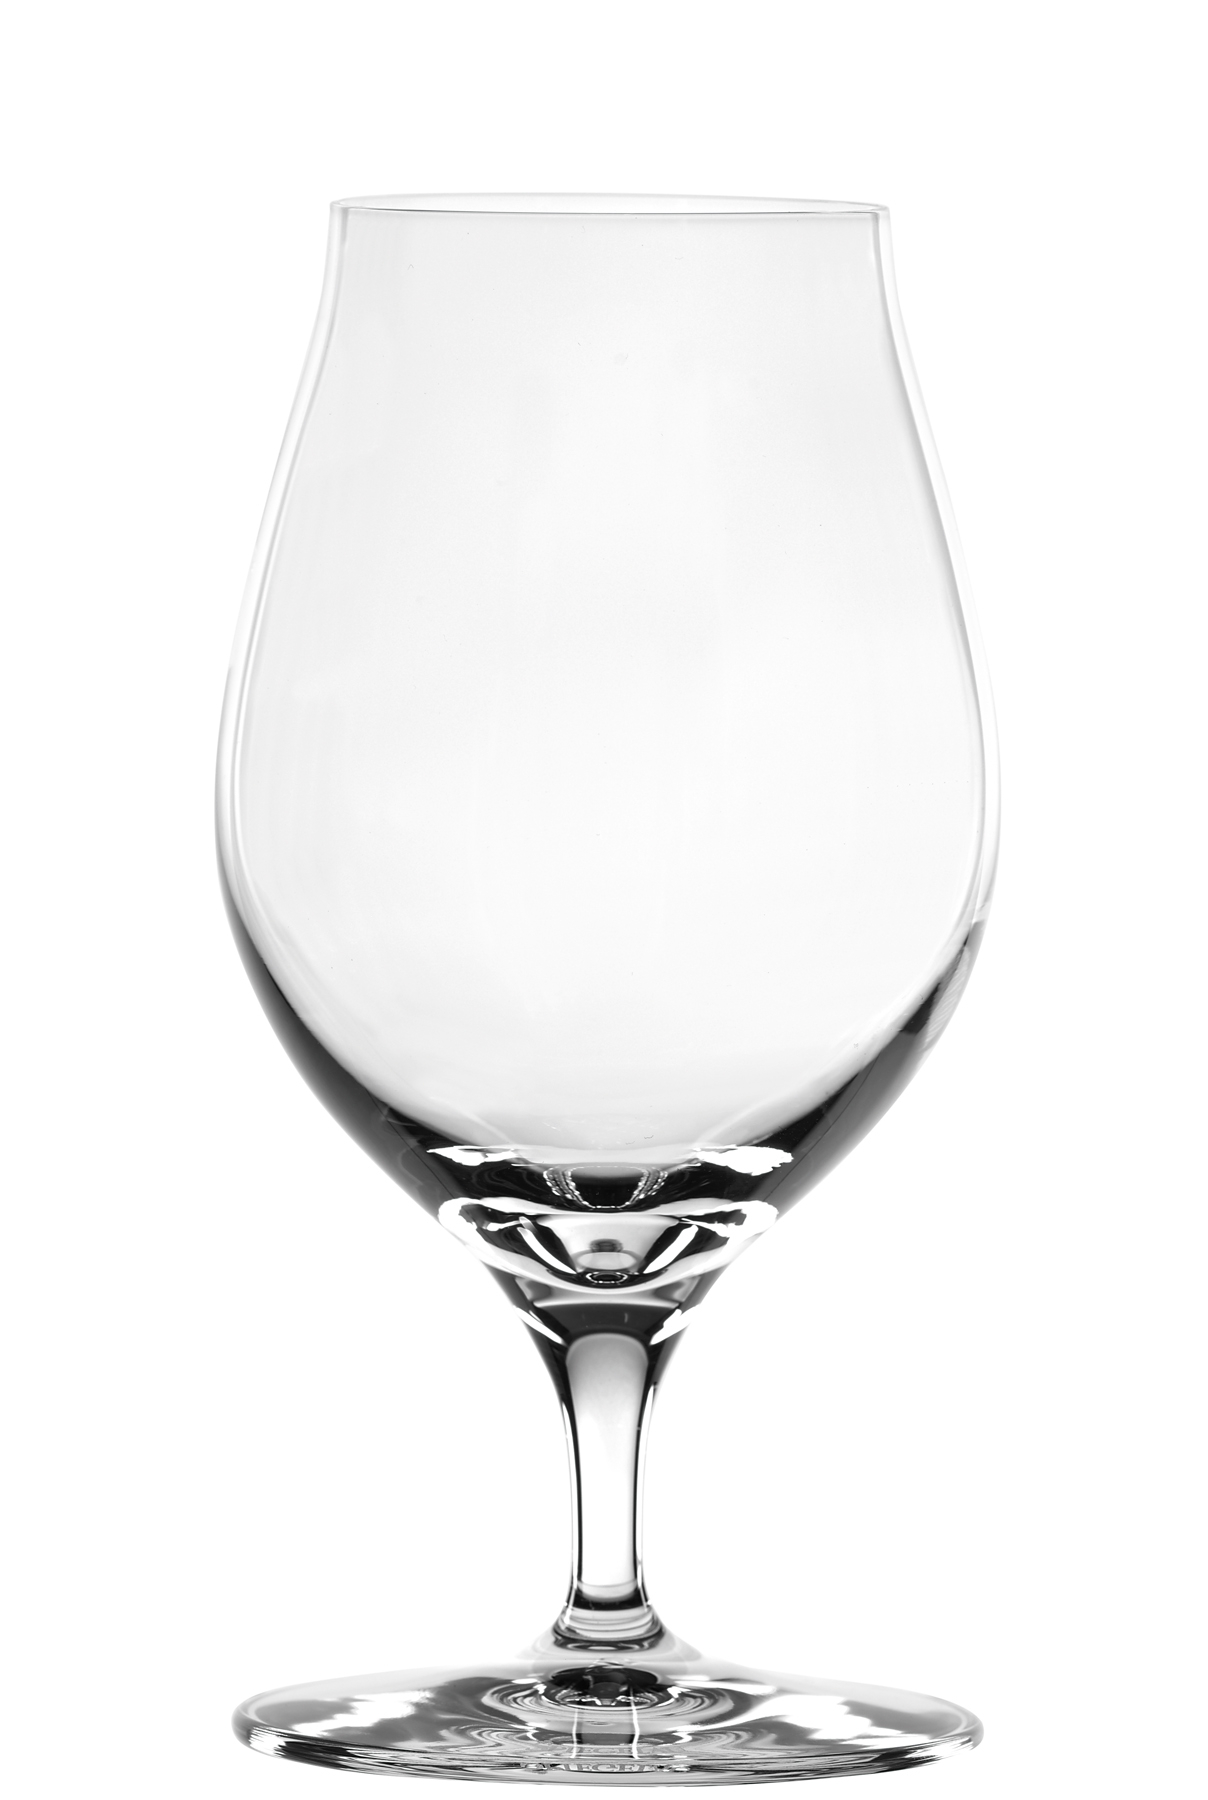 Barrel Aged glass Craft Beer Glasses, Spiegelau - 480ml